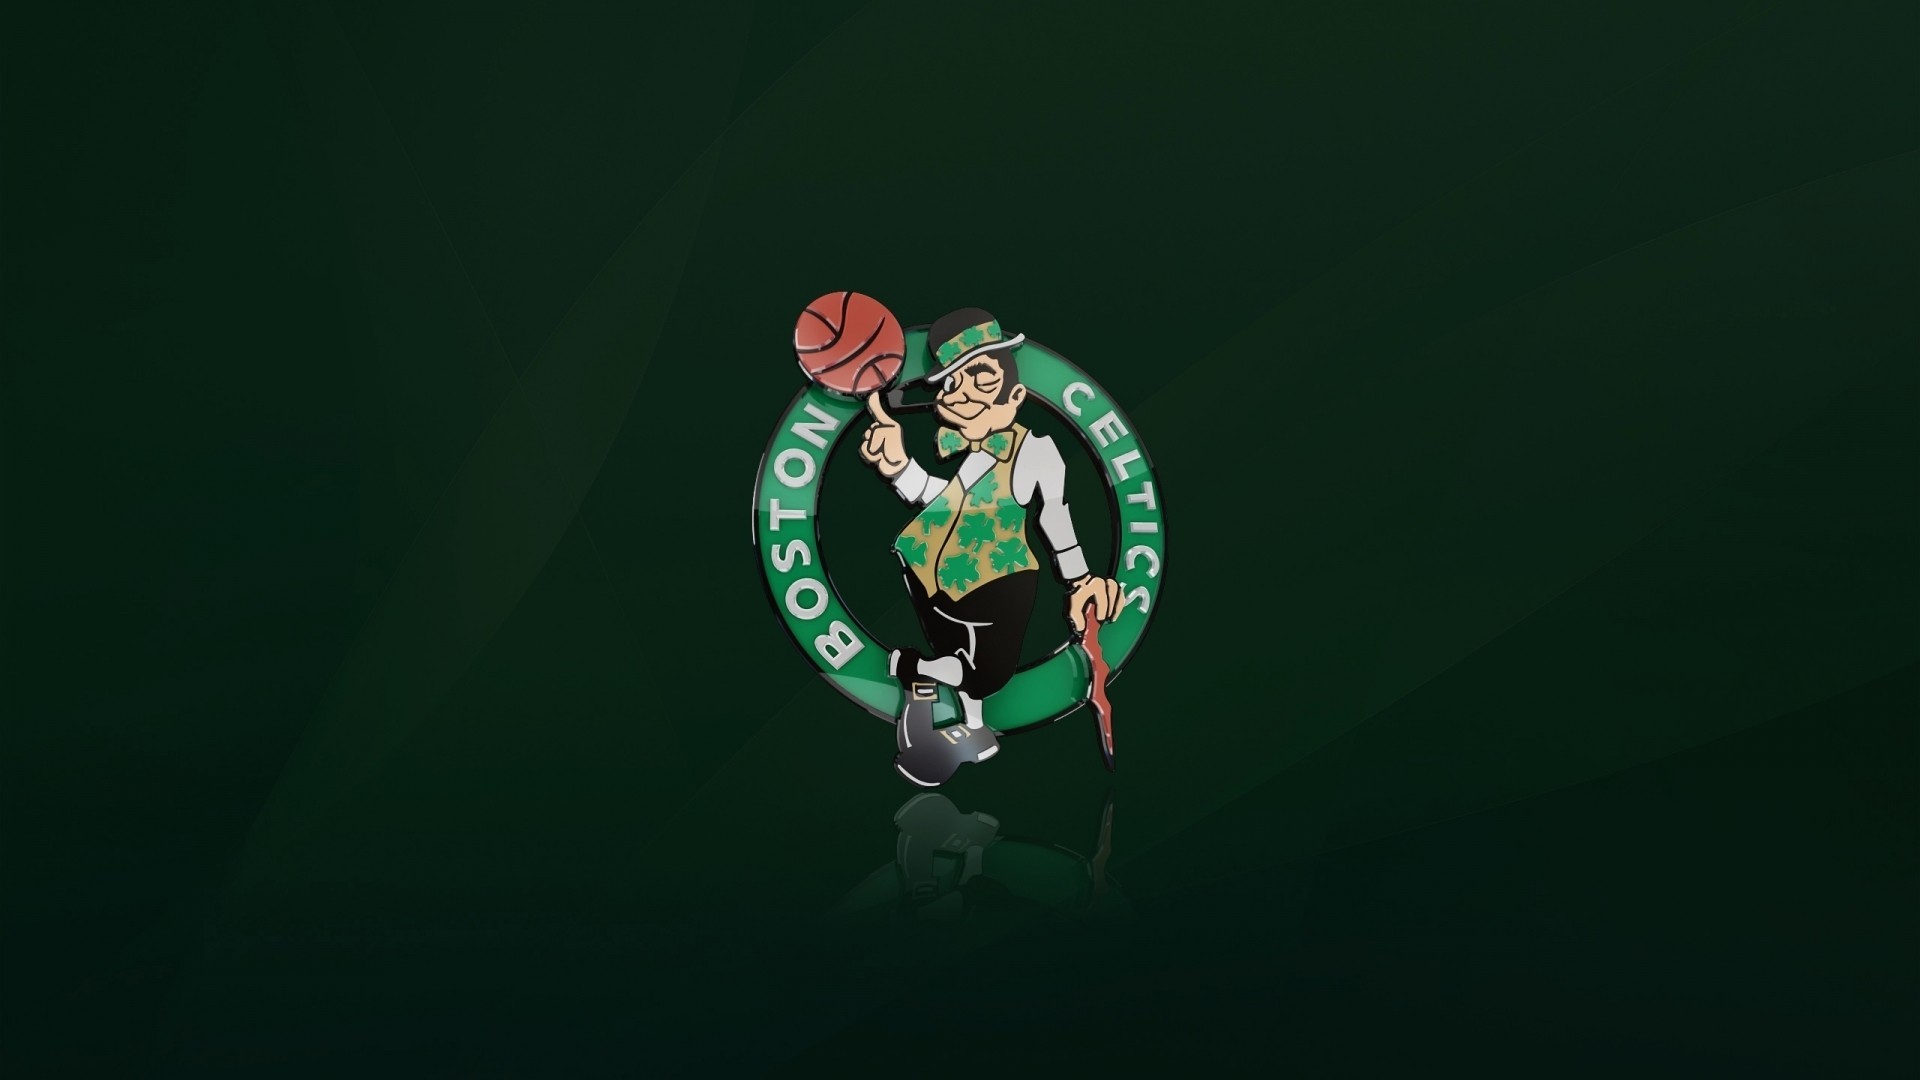 General 1920x1080 basketball Boston Celtics NBA sport green background simple background